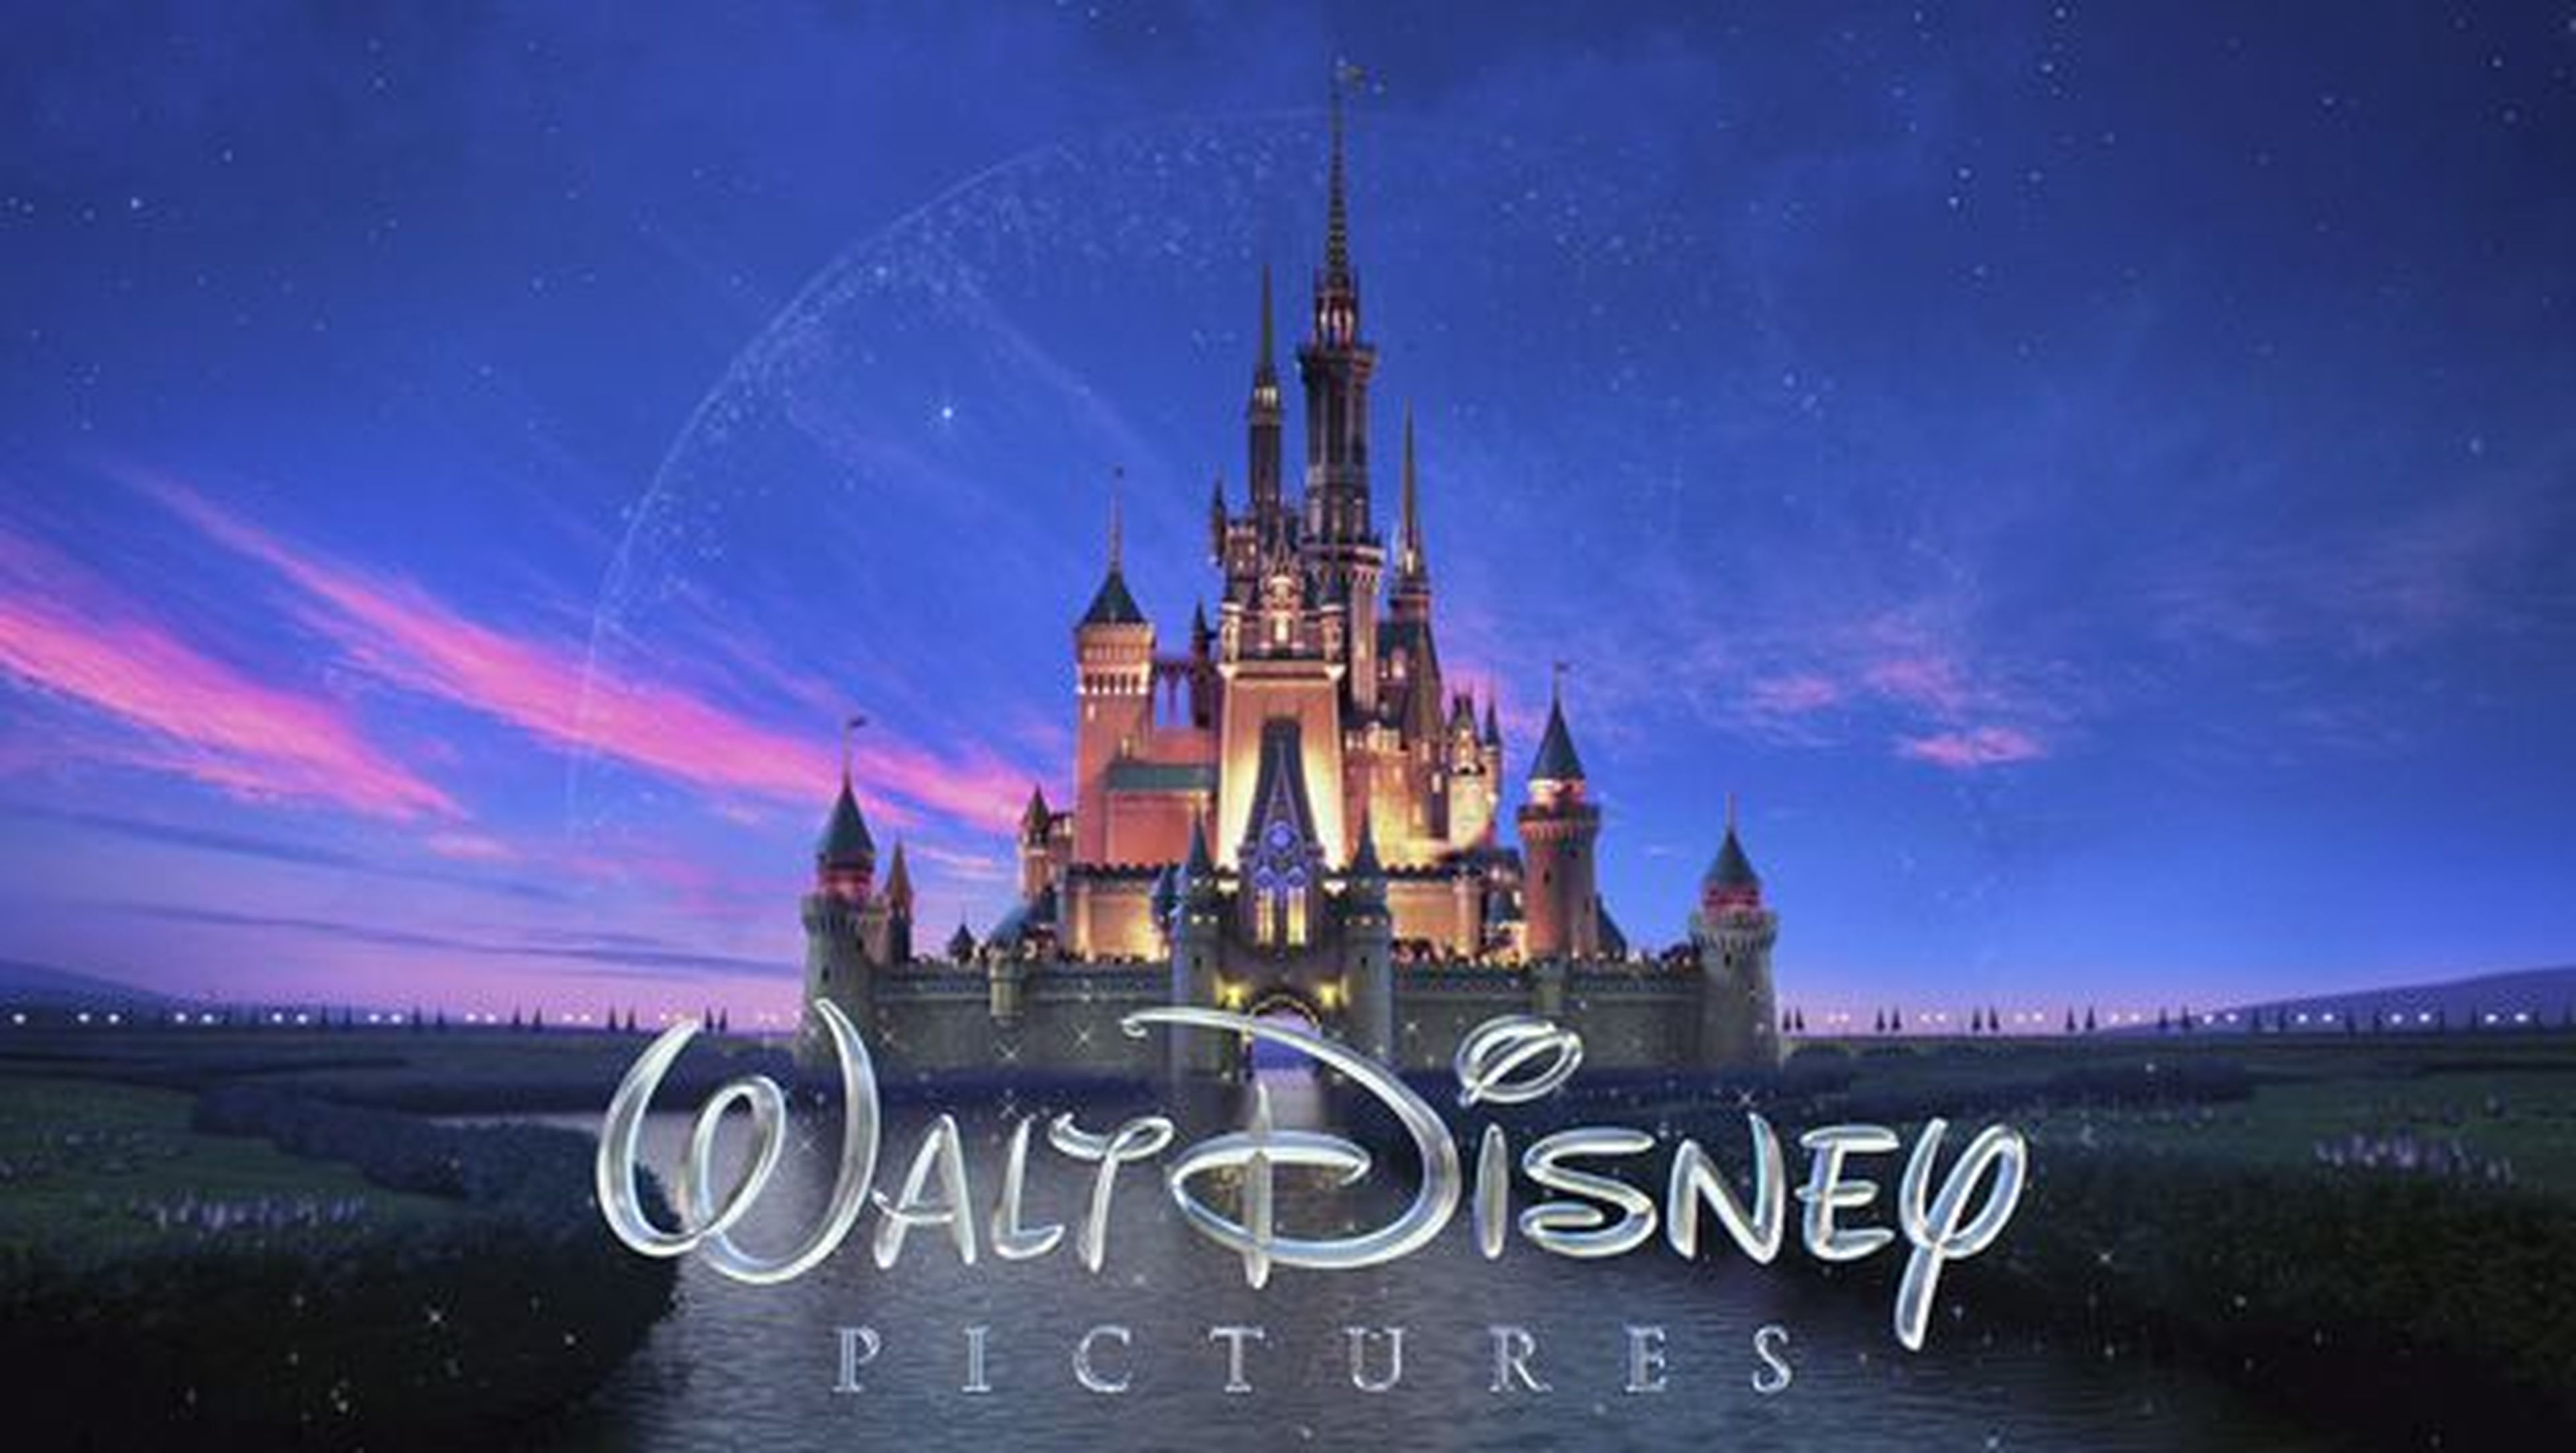 Canal entretenimiento Movistar Disney para toda la familia